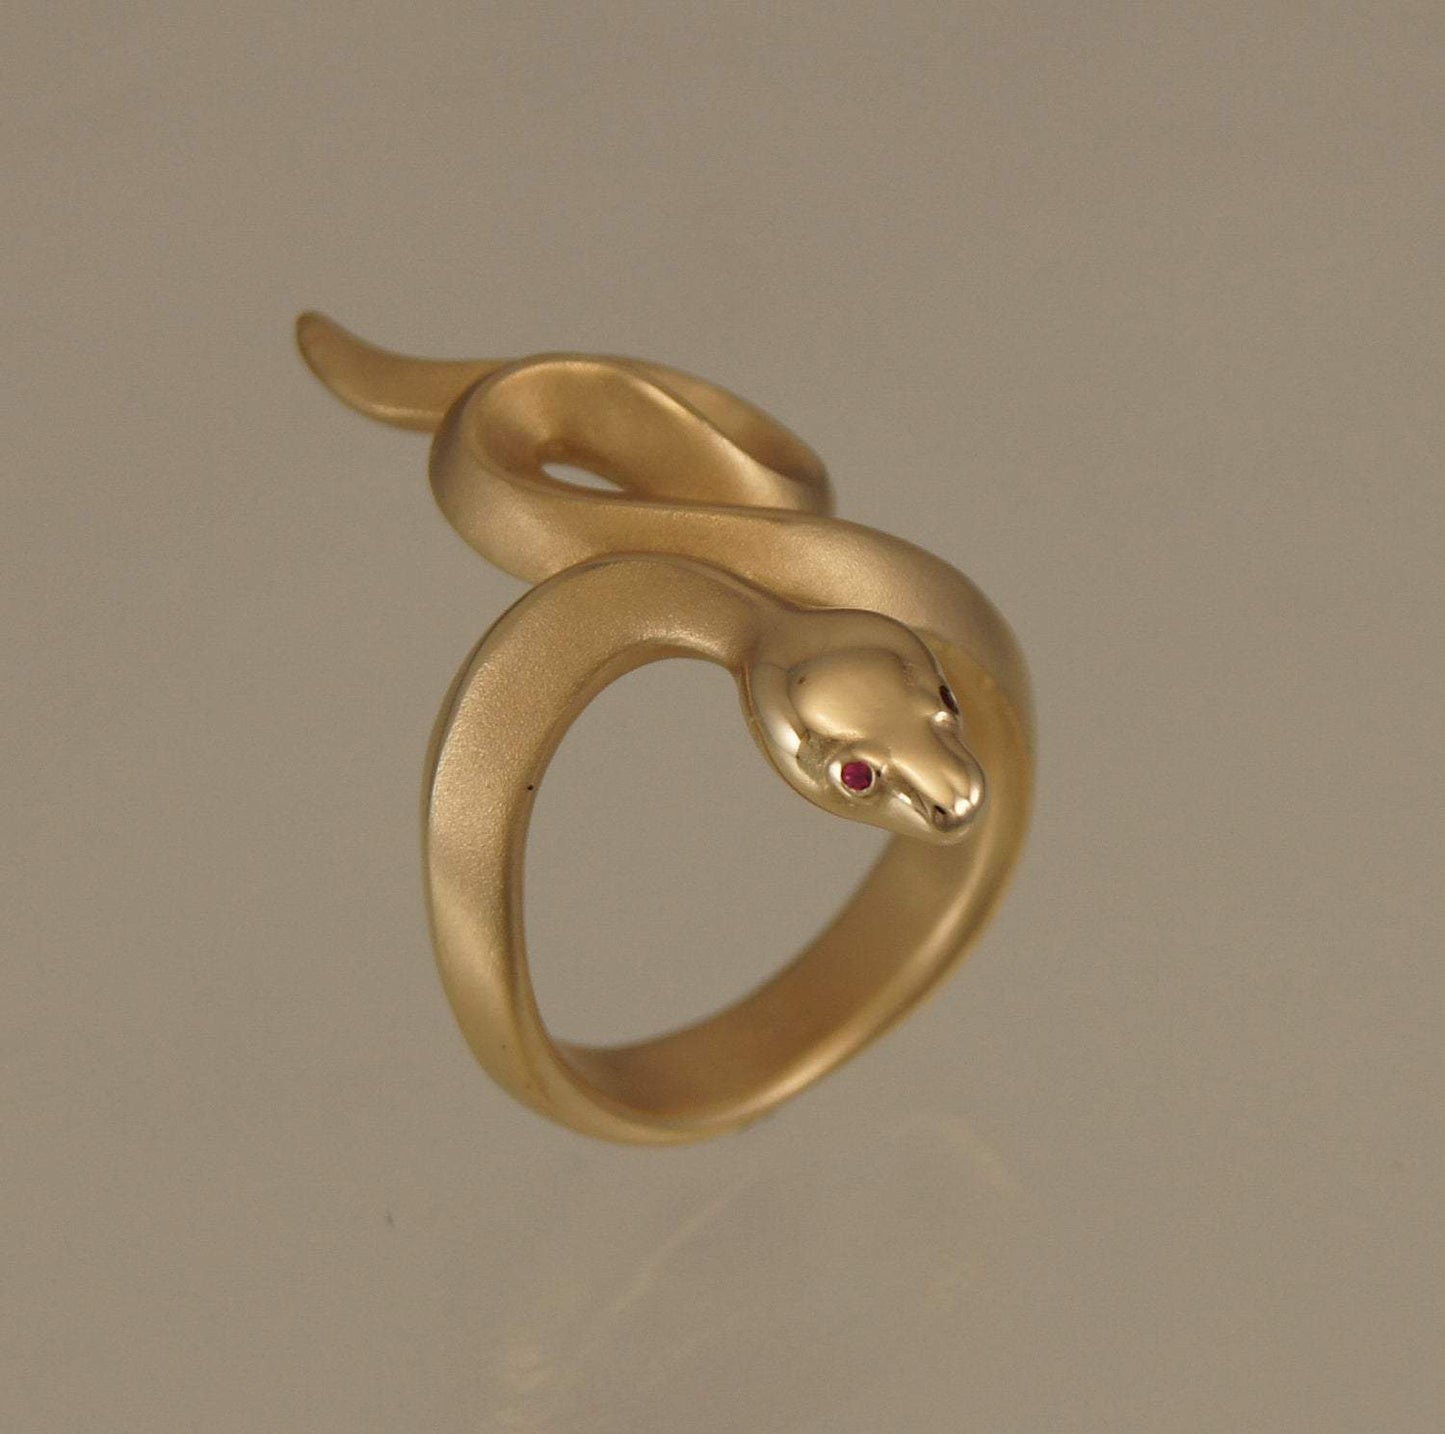 Boa Snake Ring. Coiled snake ring. Bronze Snake Ring. Snake Ring. Michael Tatom Jewelry. Sorrel Sky Gallery. Sorrel Sky Jewelry.